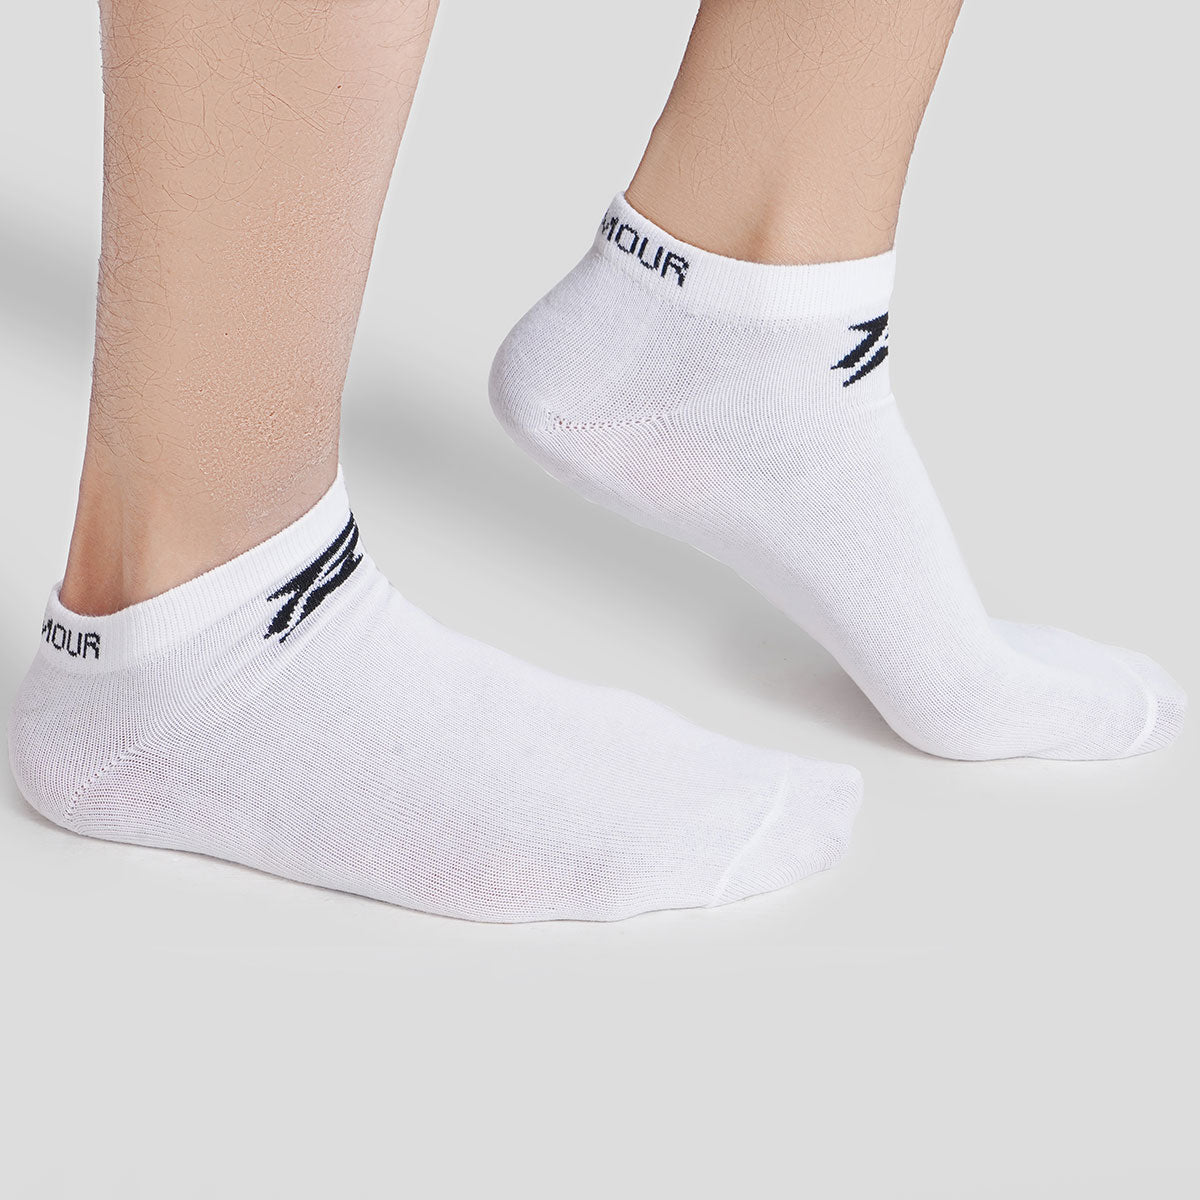 Armour Ankle Socks 3pcs (Black + Grey + White)